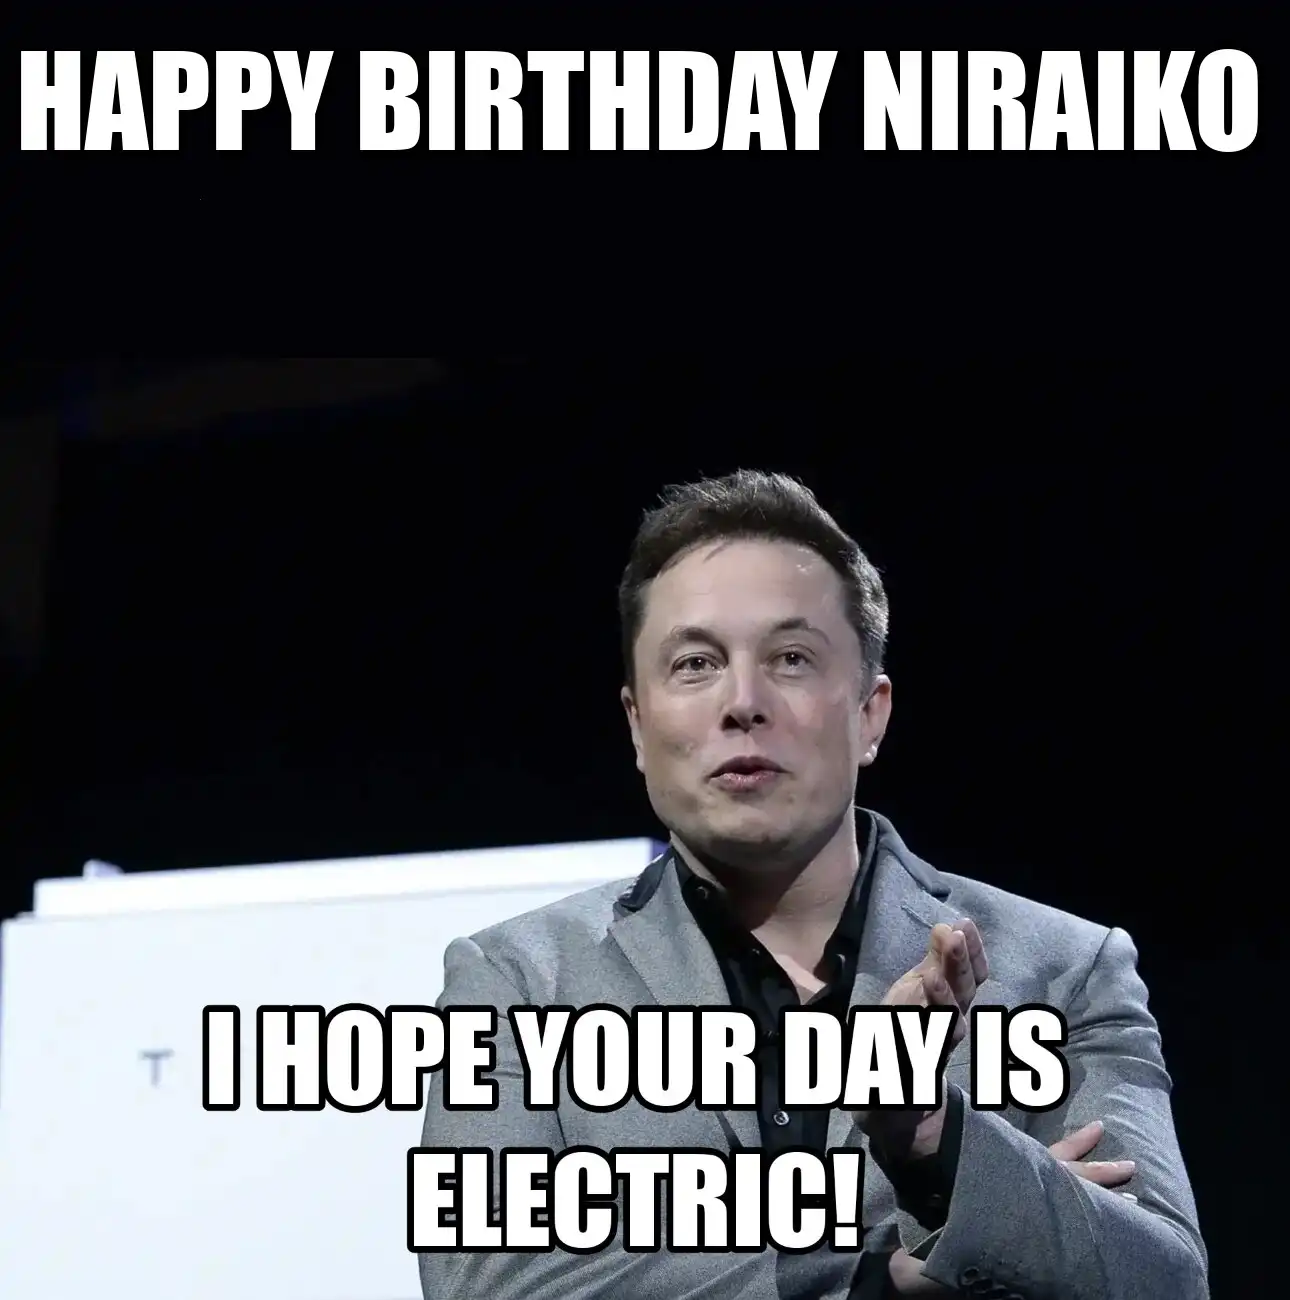 Happy Birthday Niraiko I Hope Your Day Is Electric Meme